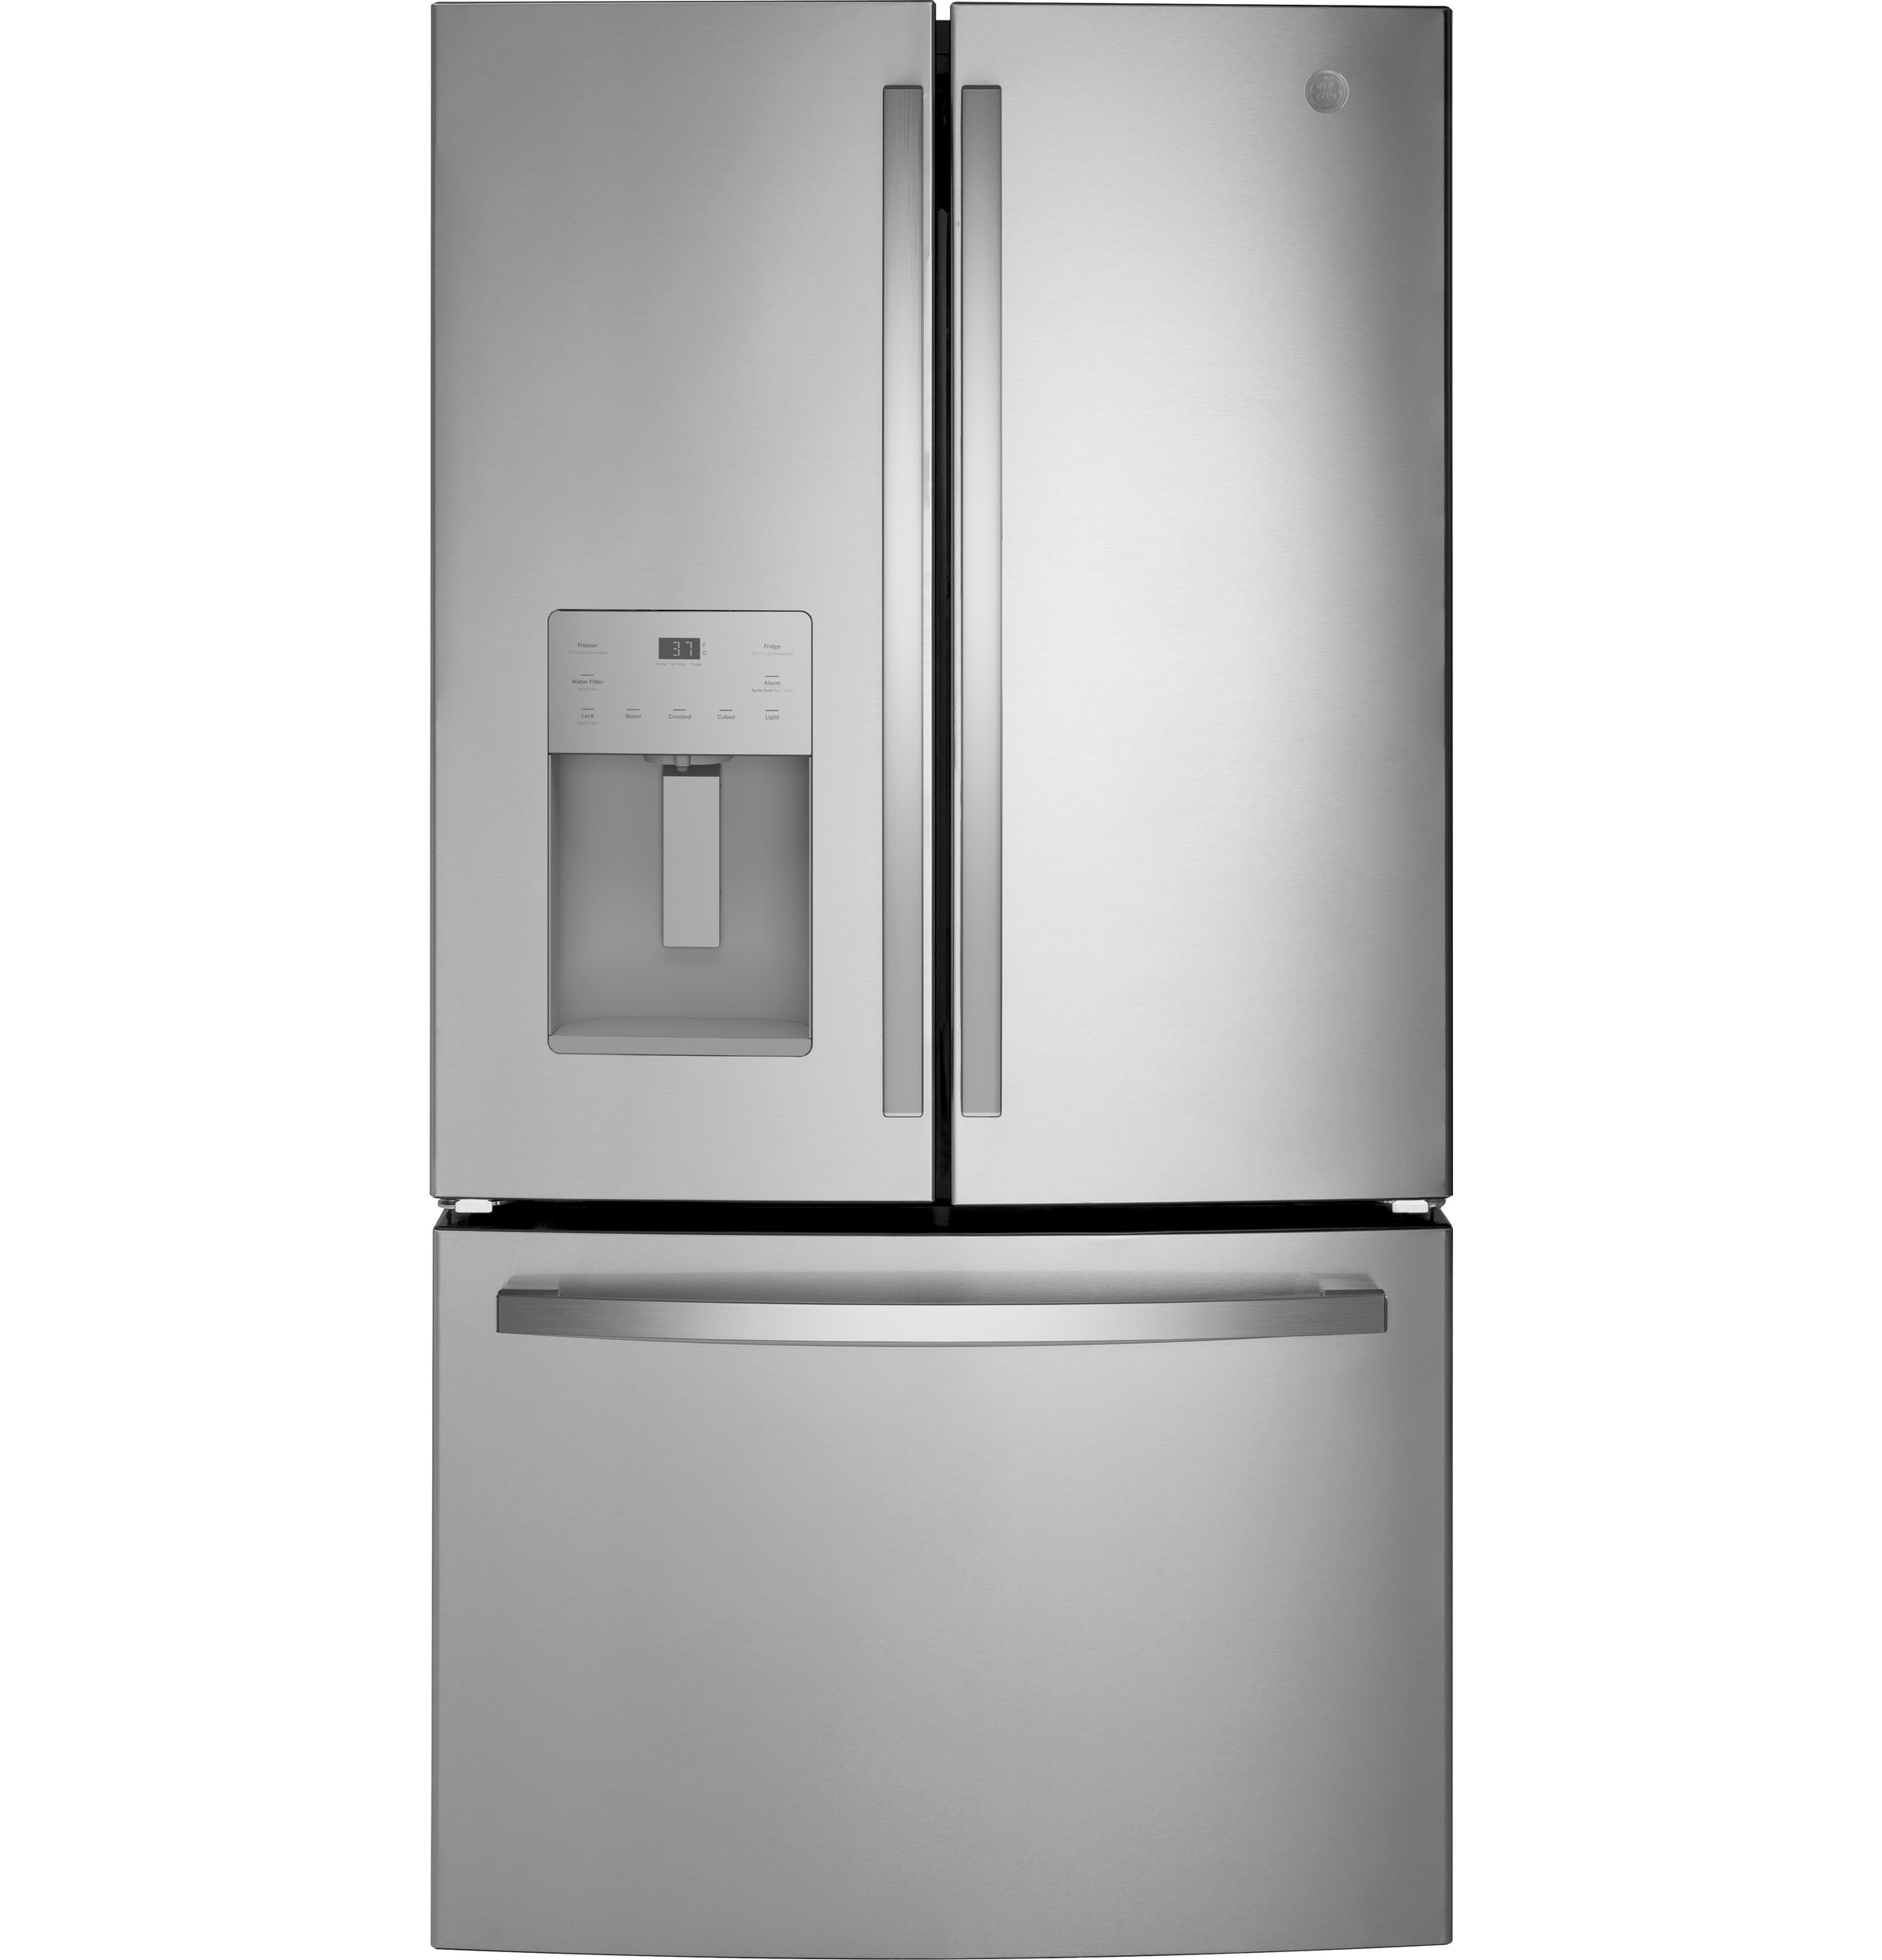 Ge 25 6 Cu Ft French Door Refrigerator, How To Adjust Shelves In Ge Refrigerator